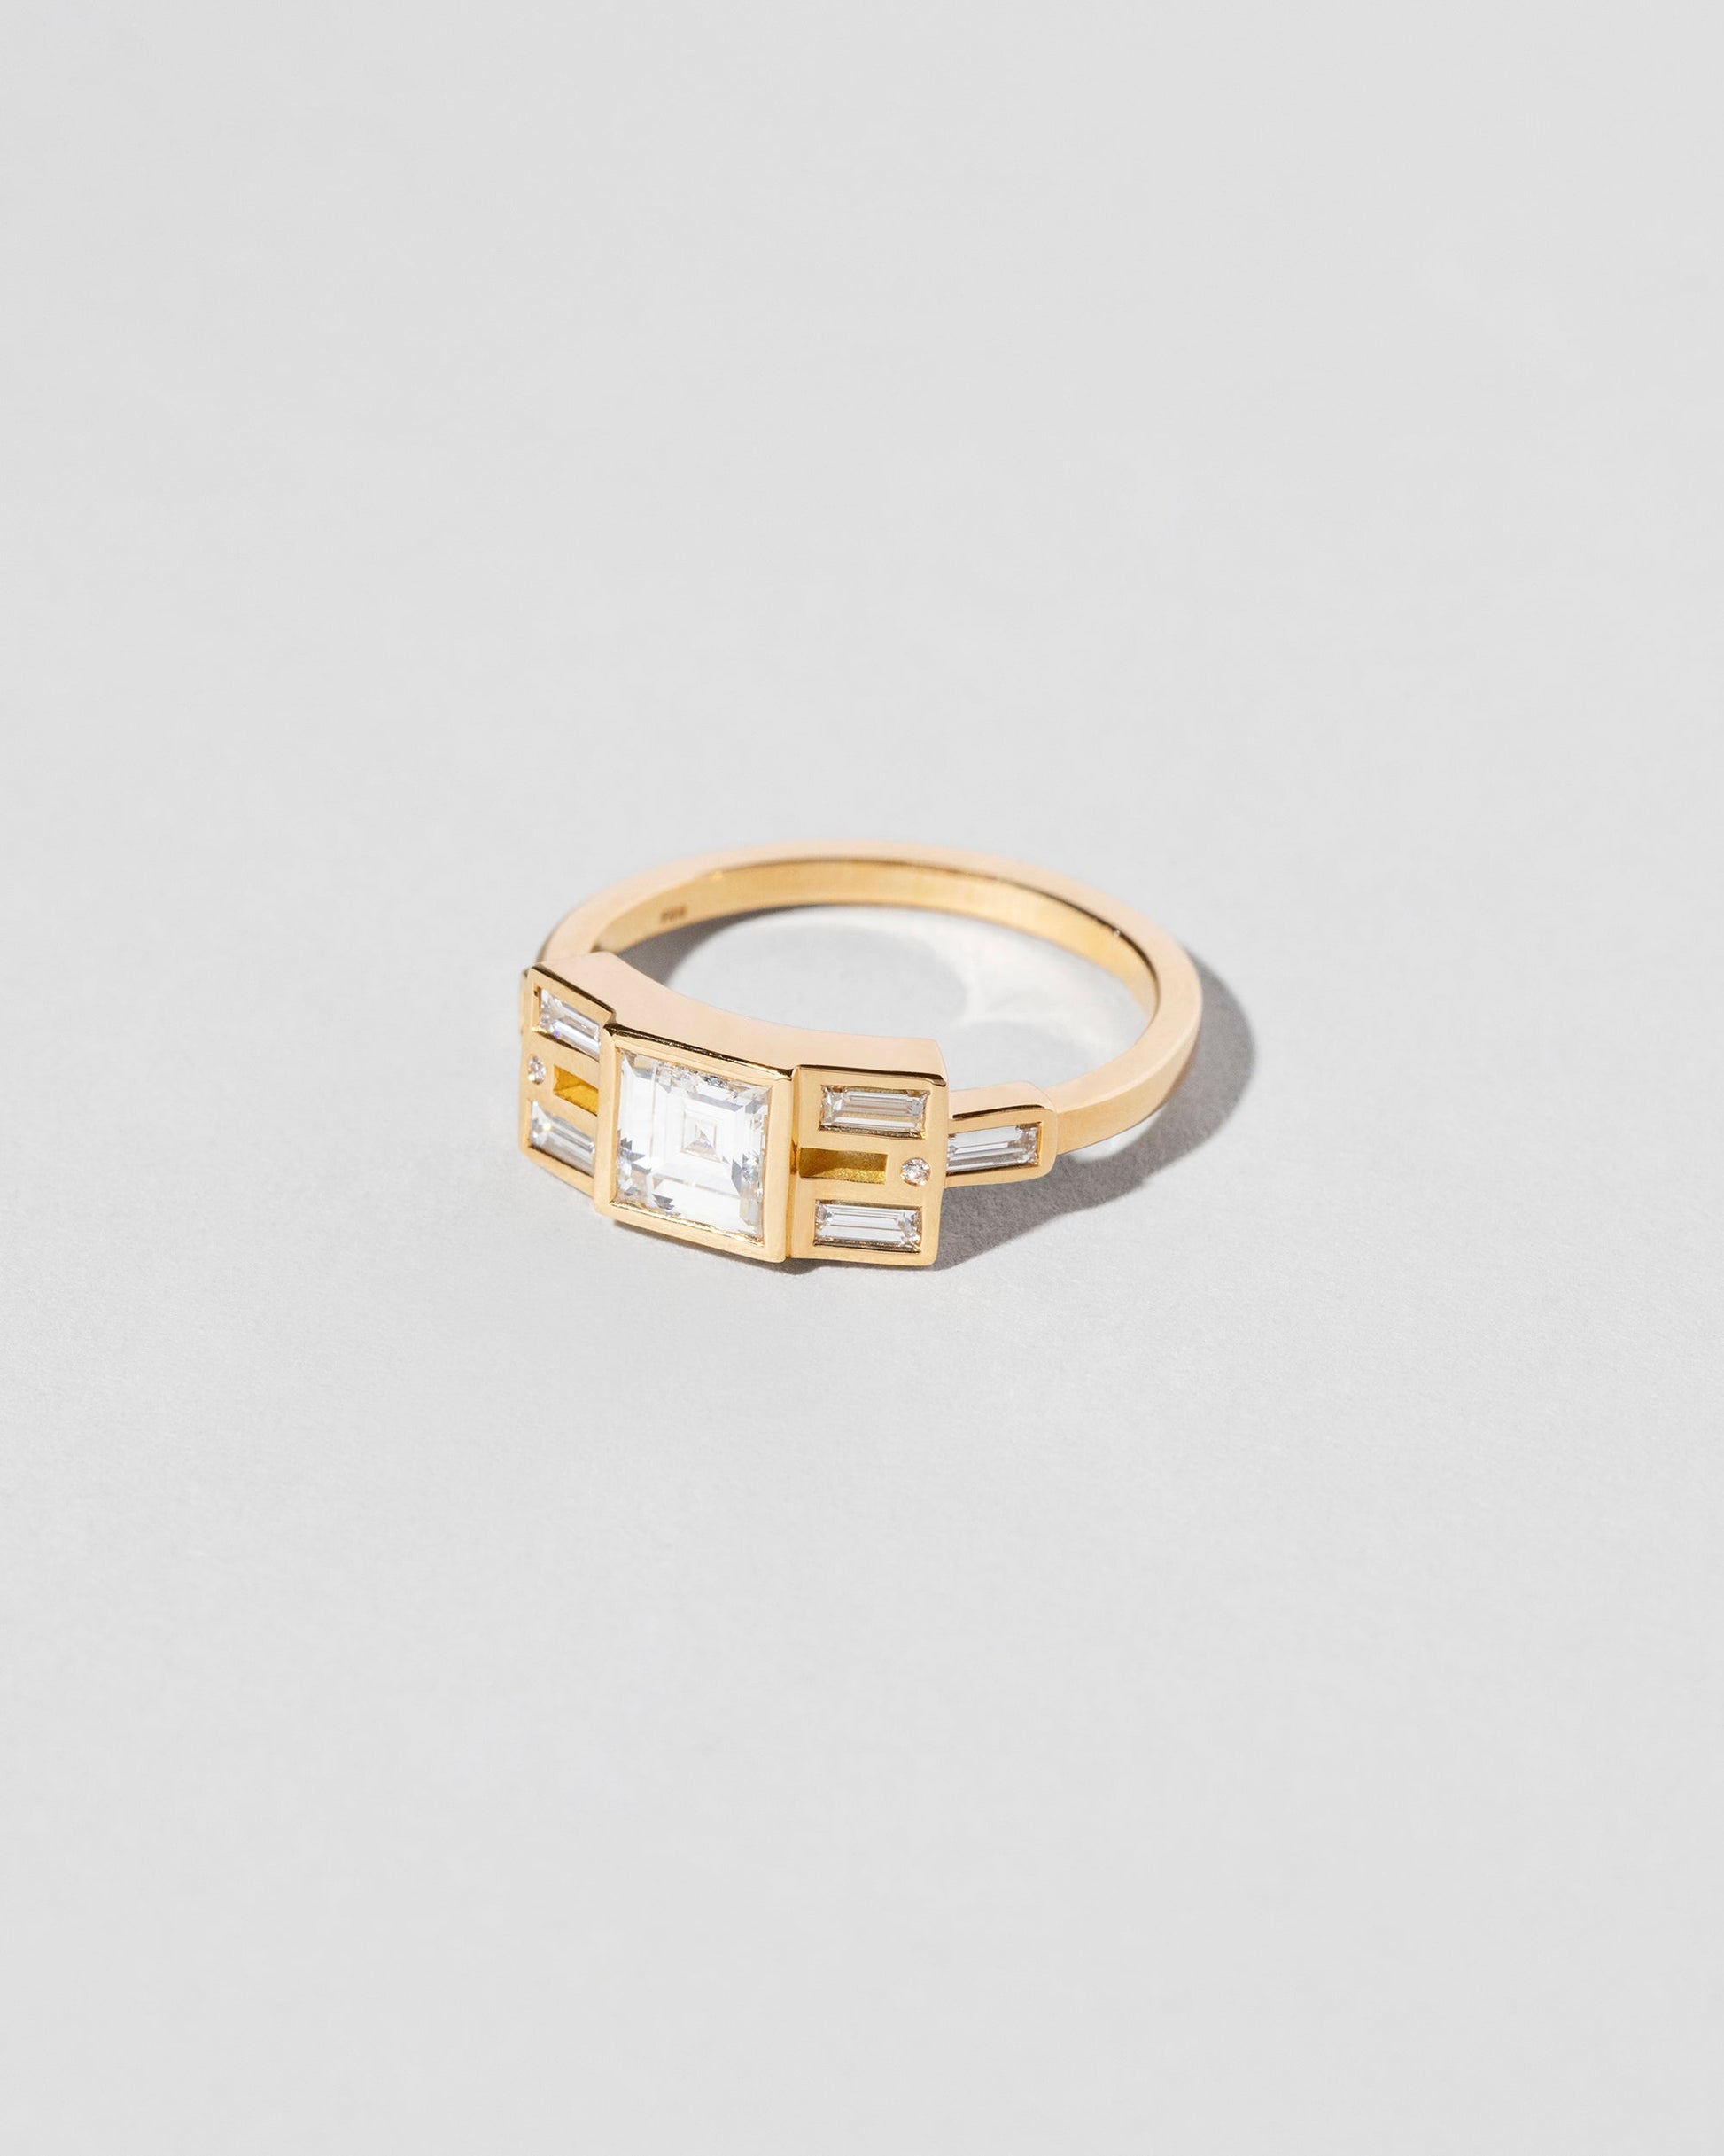  LeWitt Ring on light color background.